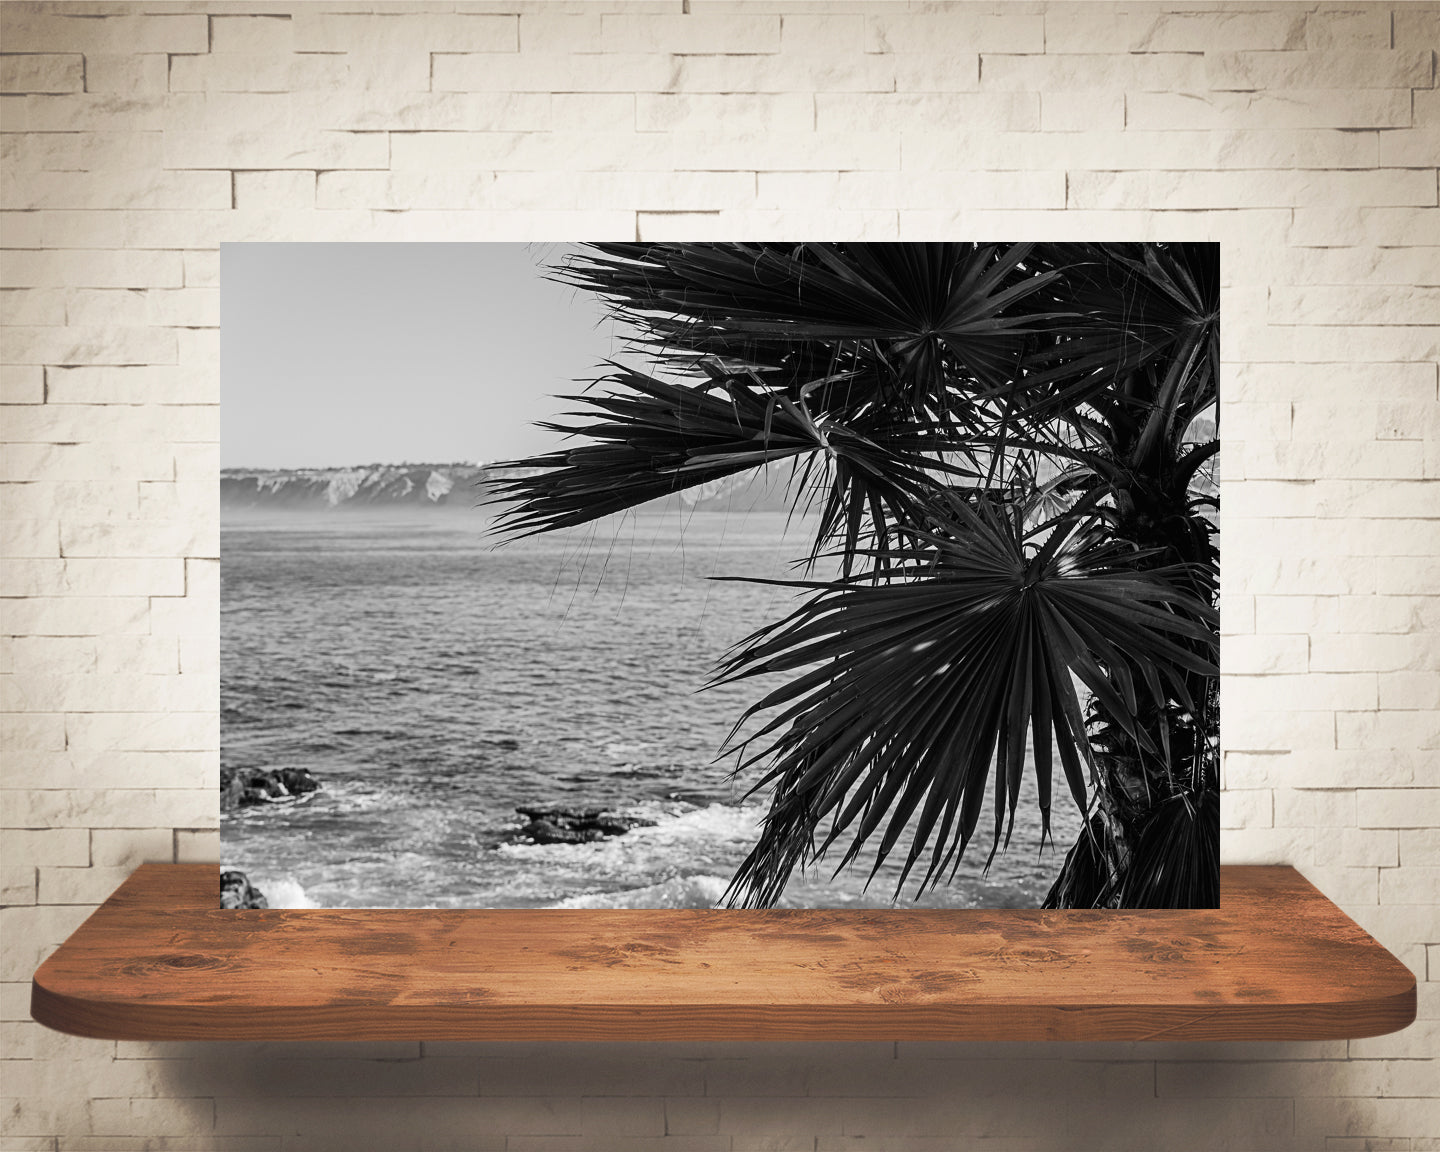 Palm Tree Oceanview Photograph Black White